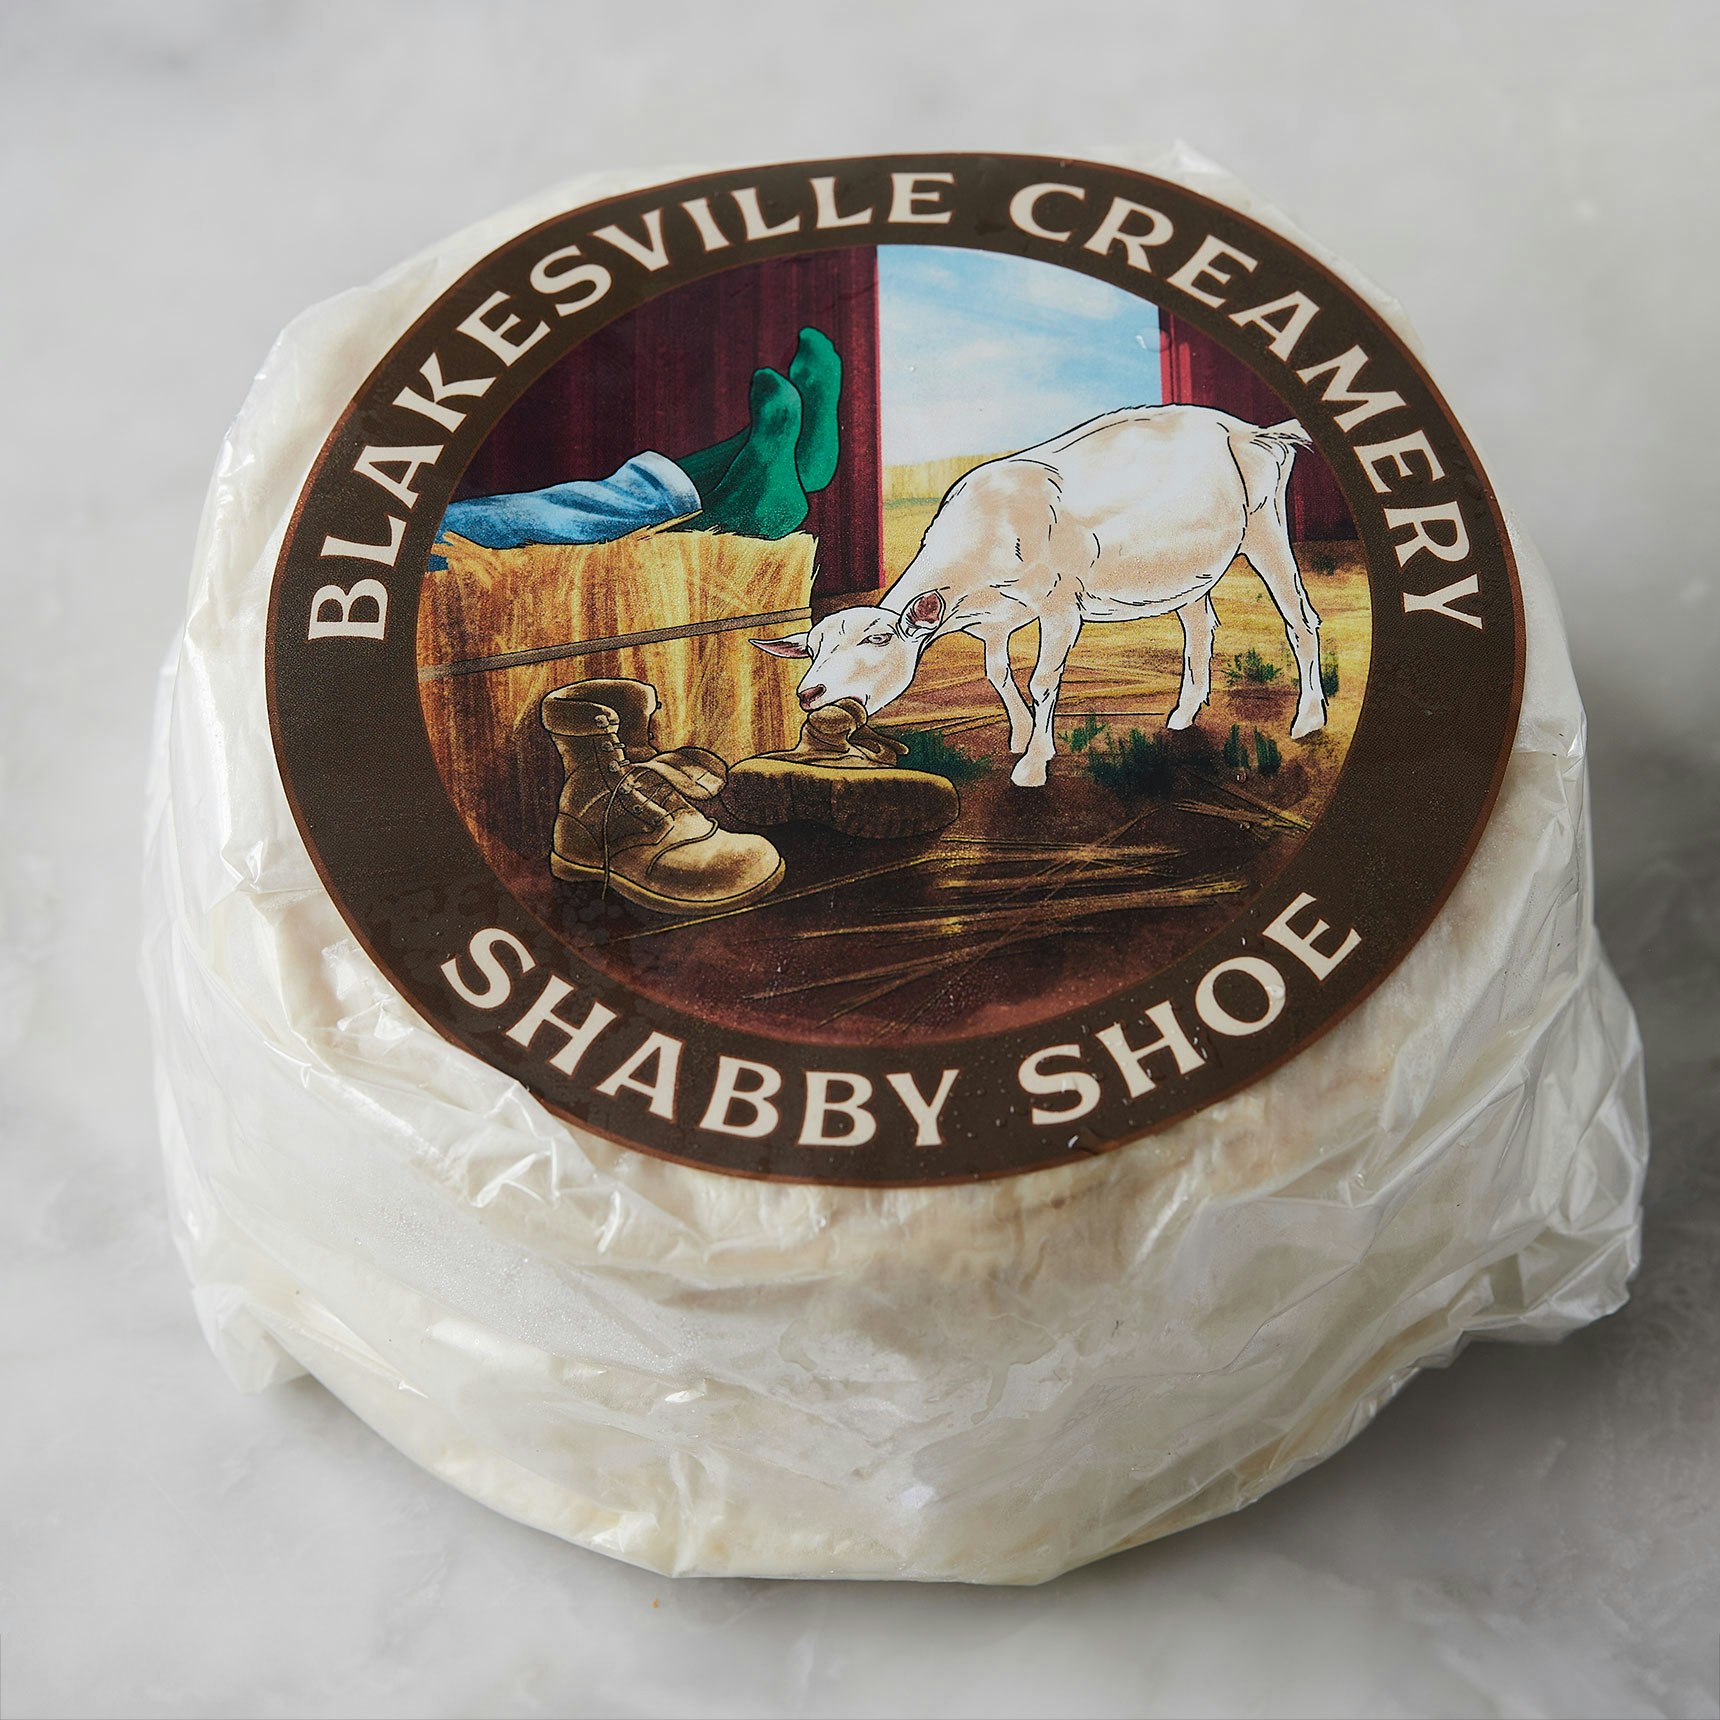 Blakesville Creamery Shabby Shoe